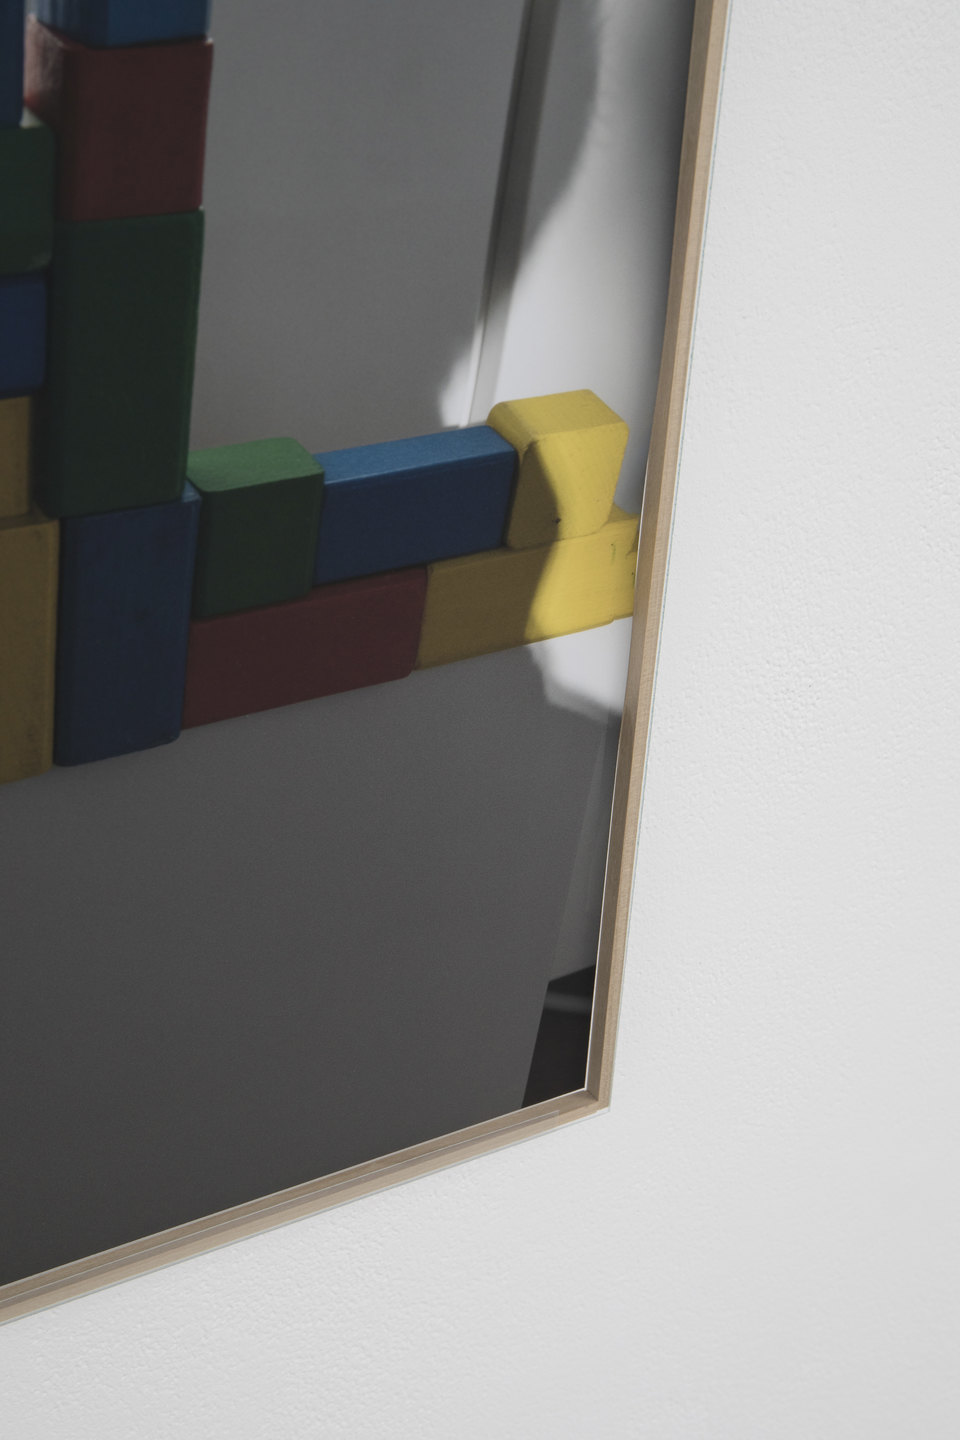 Niklas Taleb, In the City, detail, 2023, archival pigment print, artist frame; glass, tulipwood strips, tape